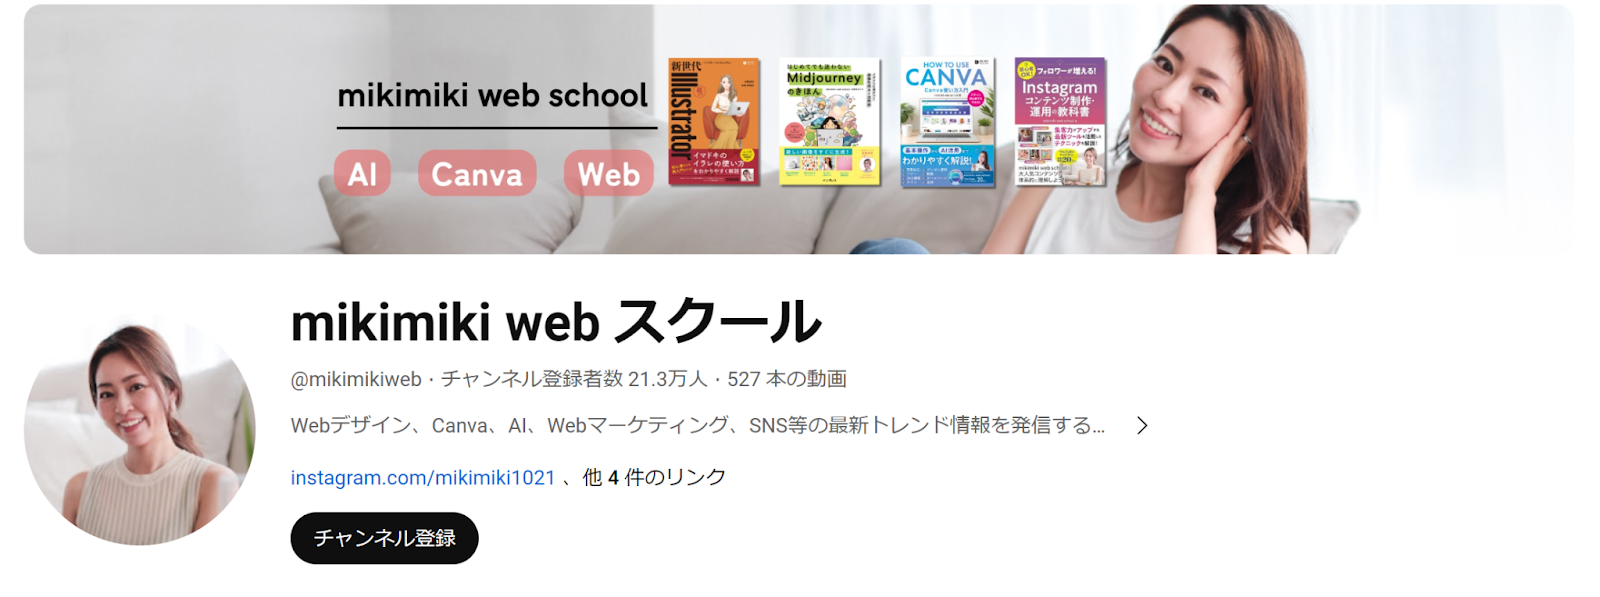 mikimiki web スクール